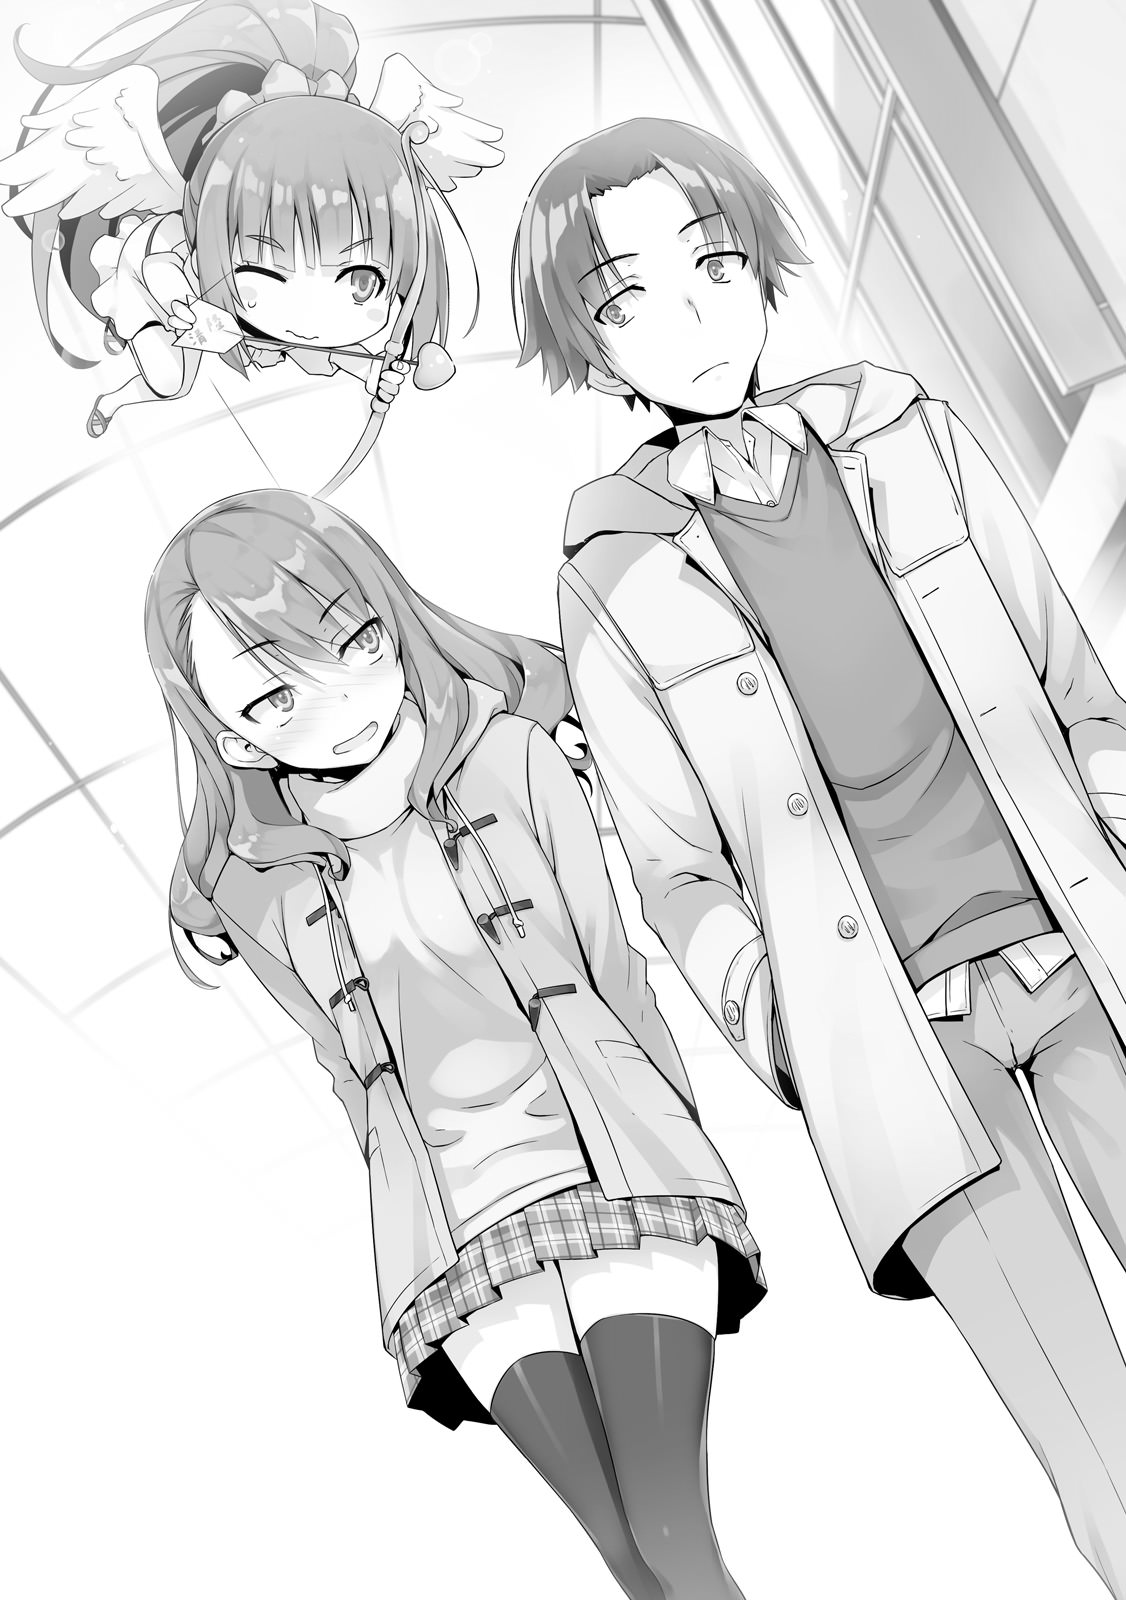 Classroom of the Elite manga in which the relationship between Suzune and  Kiyotaka is shipped 💕🧡 : r/ClassroomOfTheElite